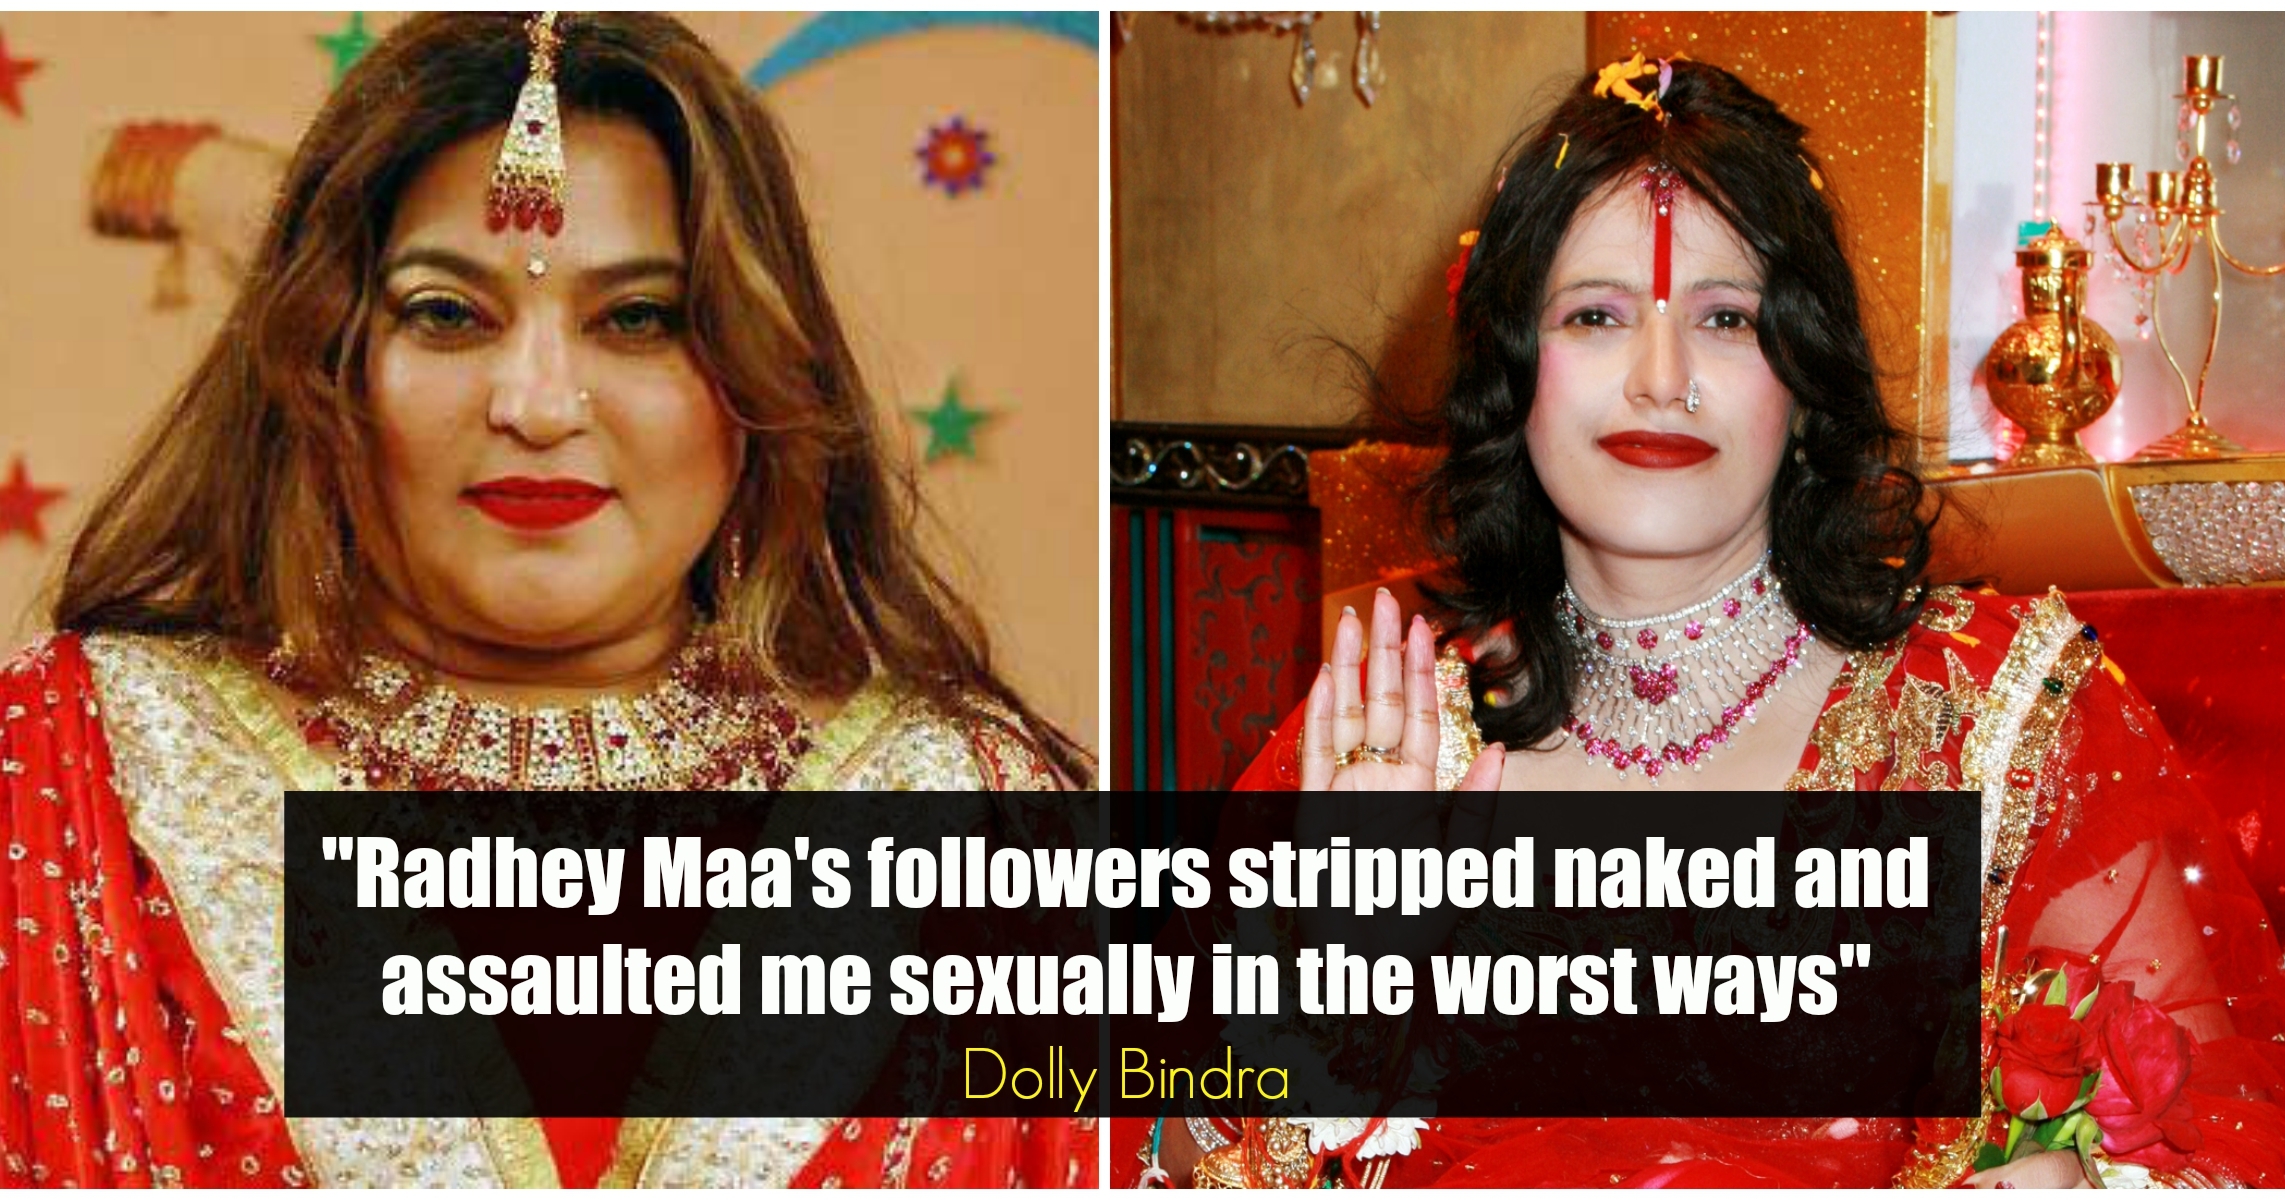 Radhe Maa Organises Sex Parties Dolly Bindra Makes Scandalous 